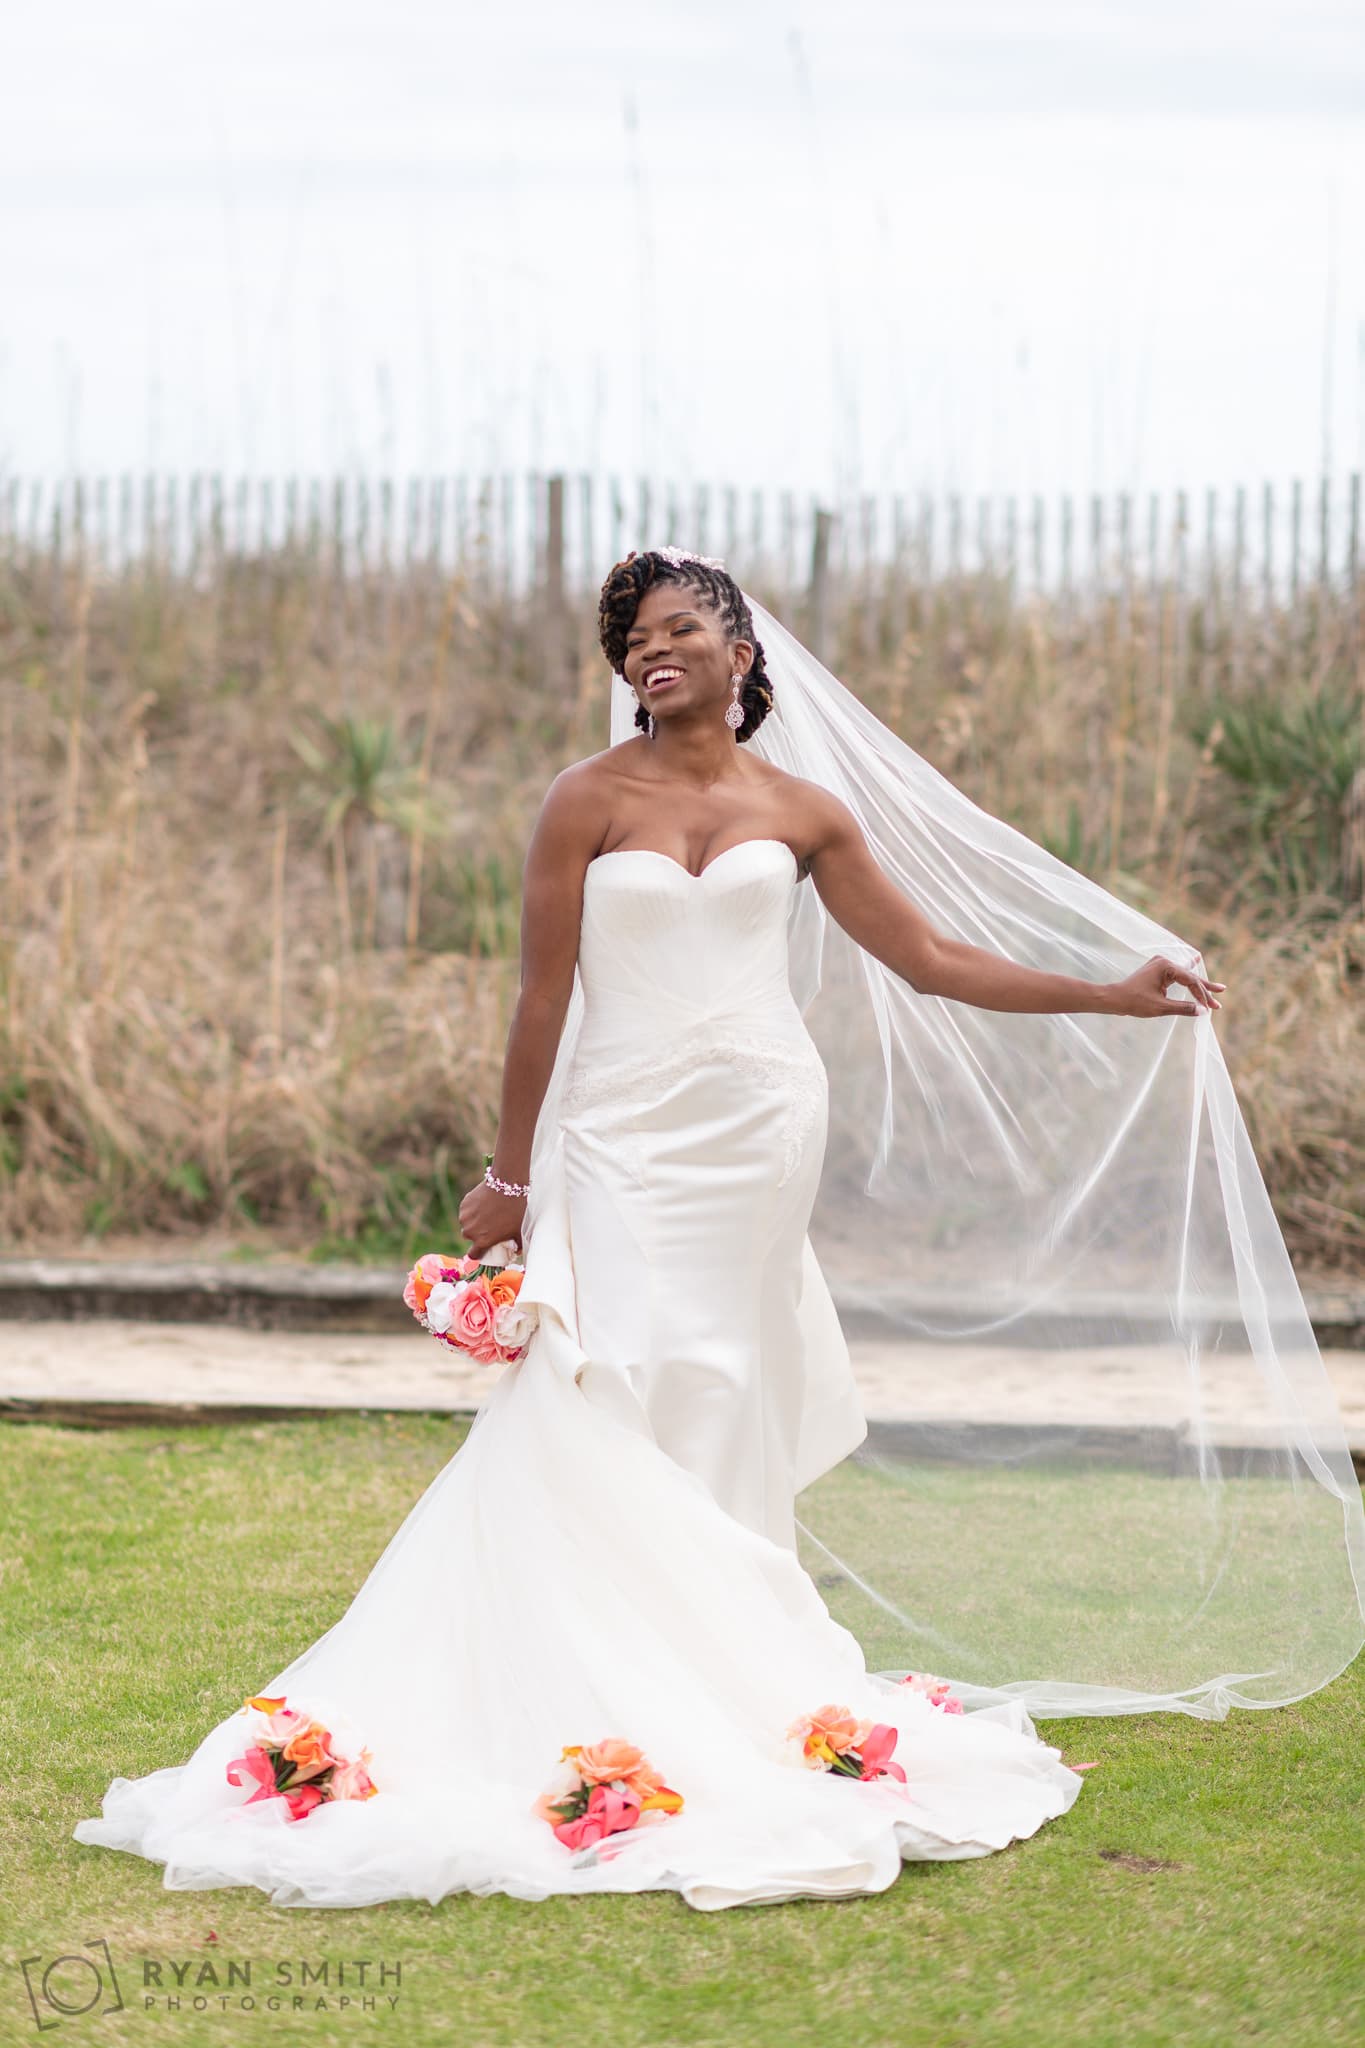 Bride posing with flowers on her dress - Doubletree Resort - Myrtle Beach